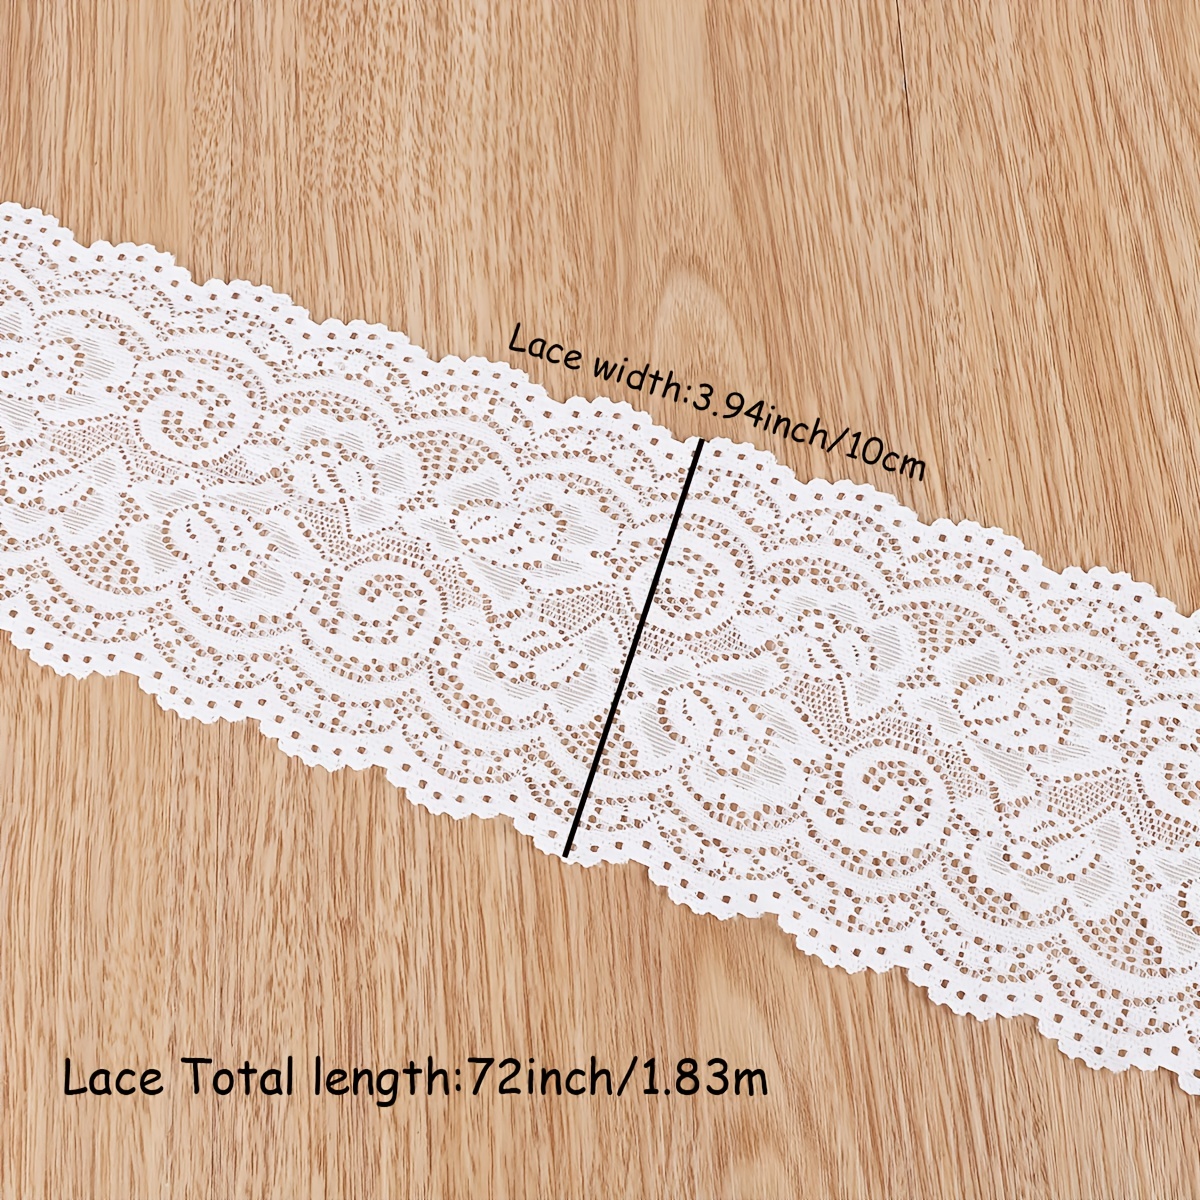 Black Lace Trim Cotton Embroidered Lace Ribbon Crochet Lace Fabric